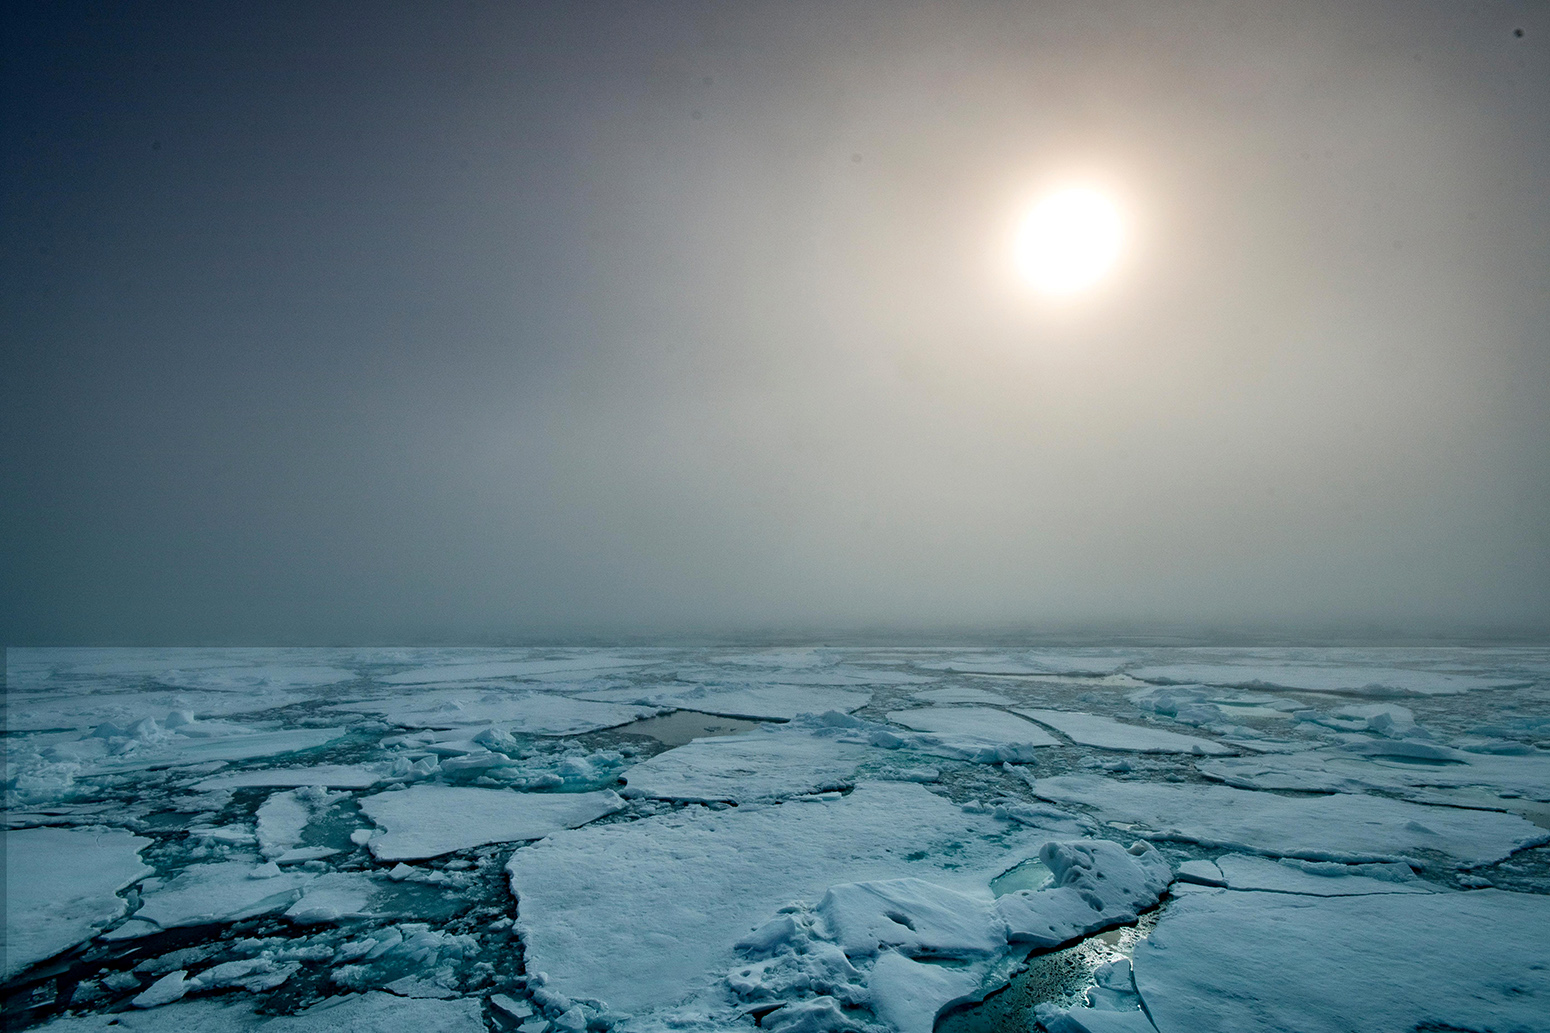 Arctic sea ice breaking apart. Credit: Jenna Chamberlain / Alamy Stock Photo. PE9R7J